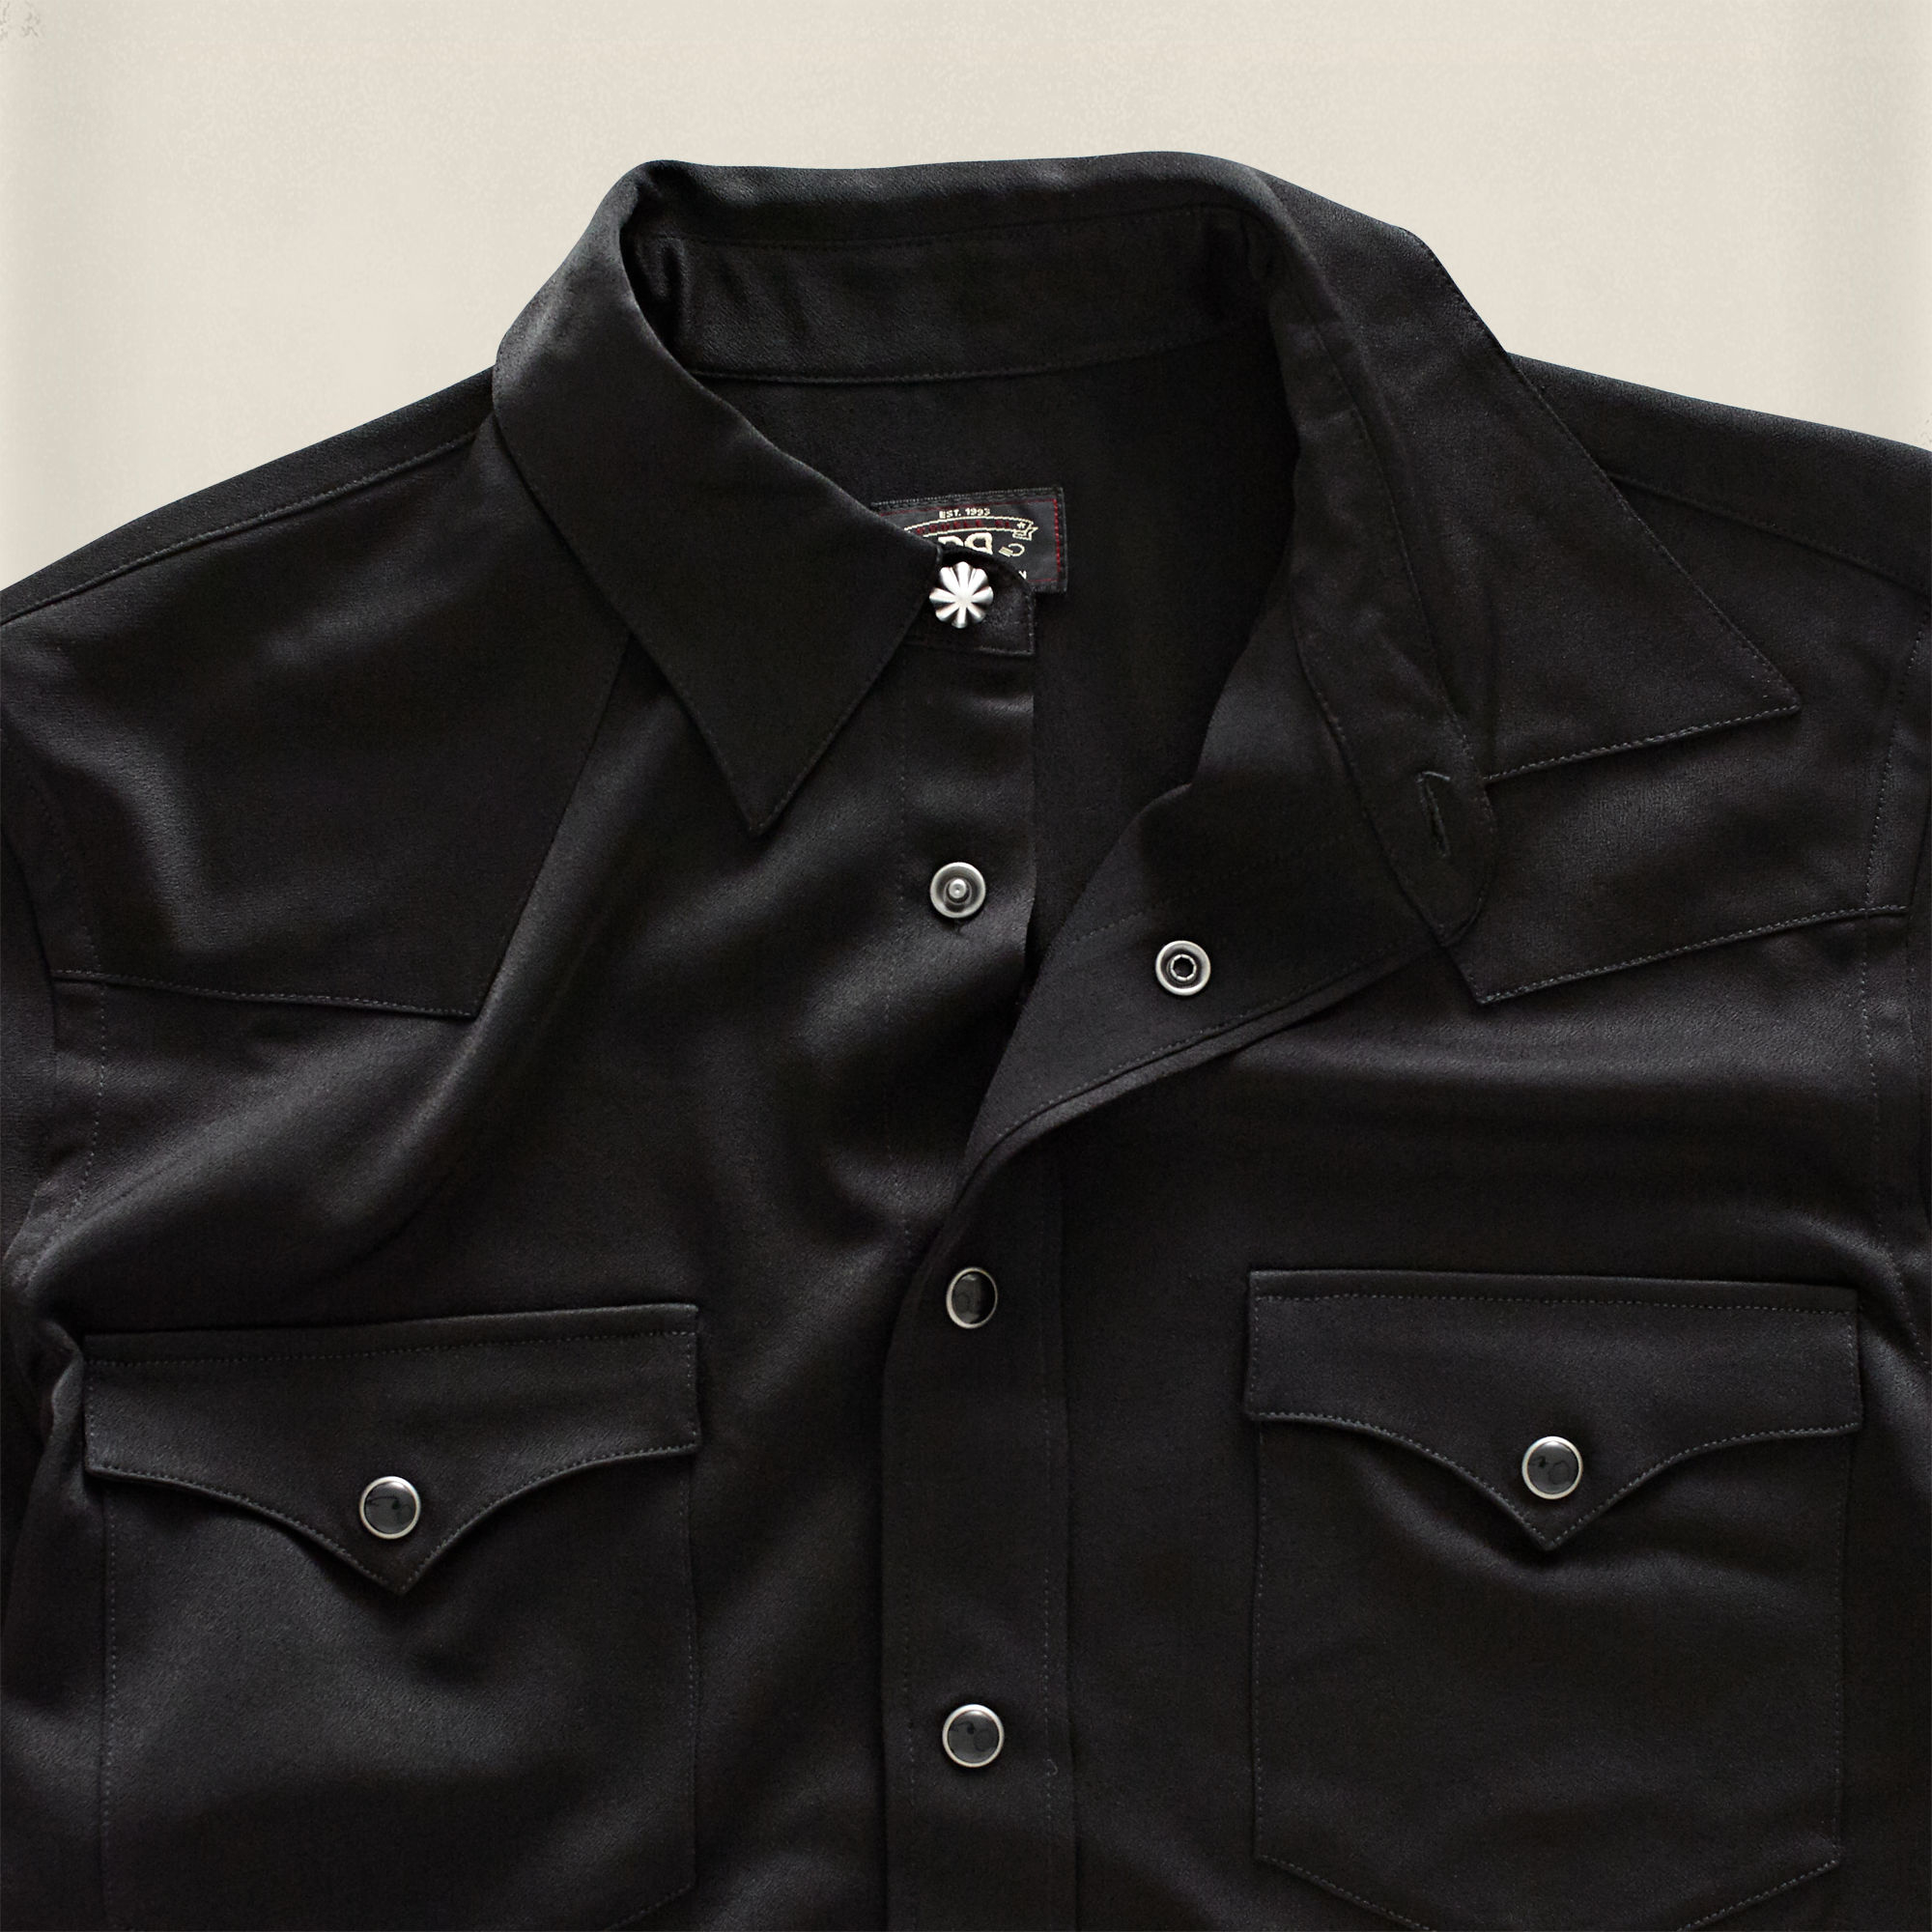 RRL Satin Western Shirt in Black for Men - Lyst